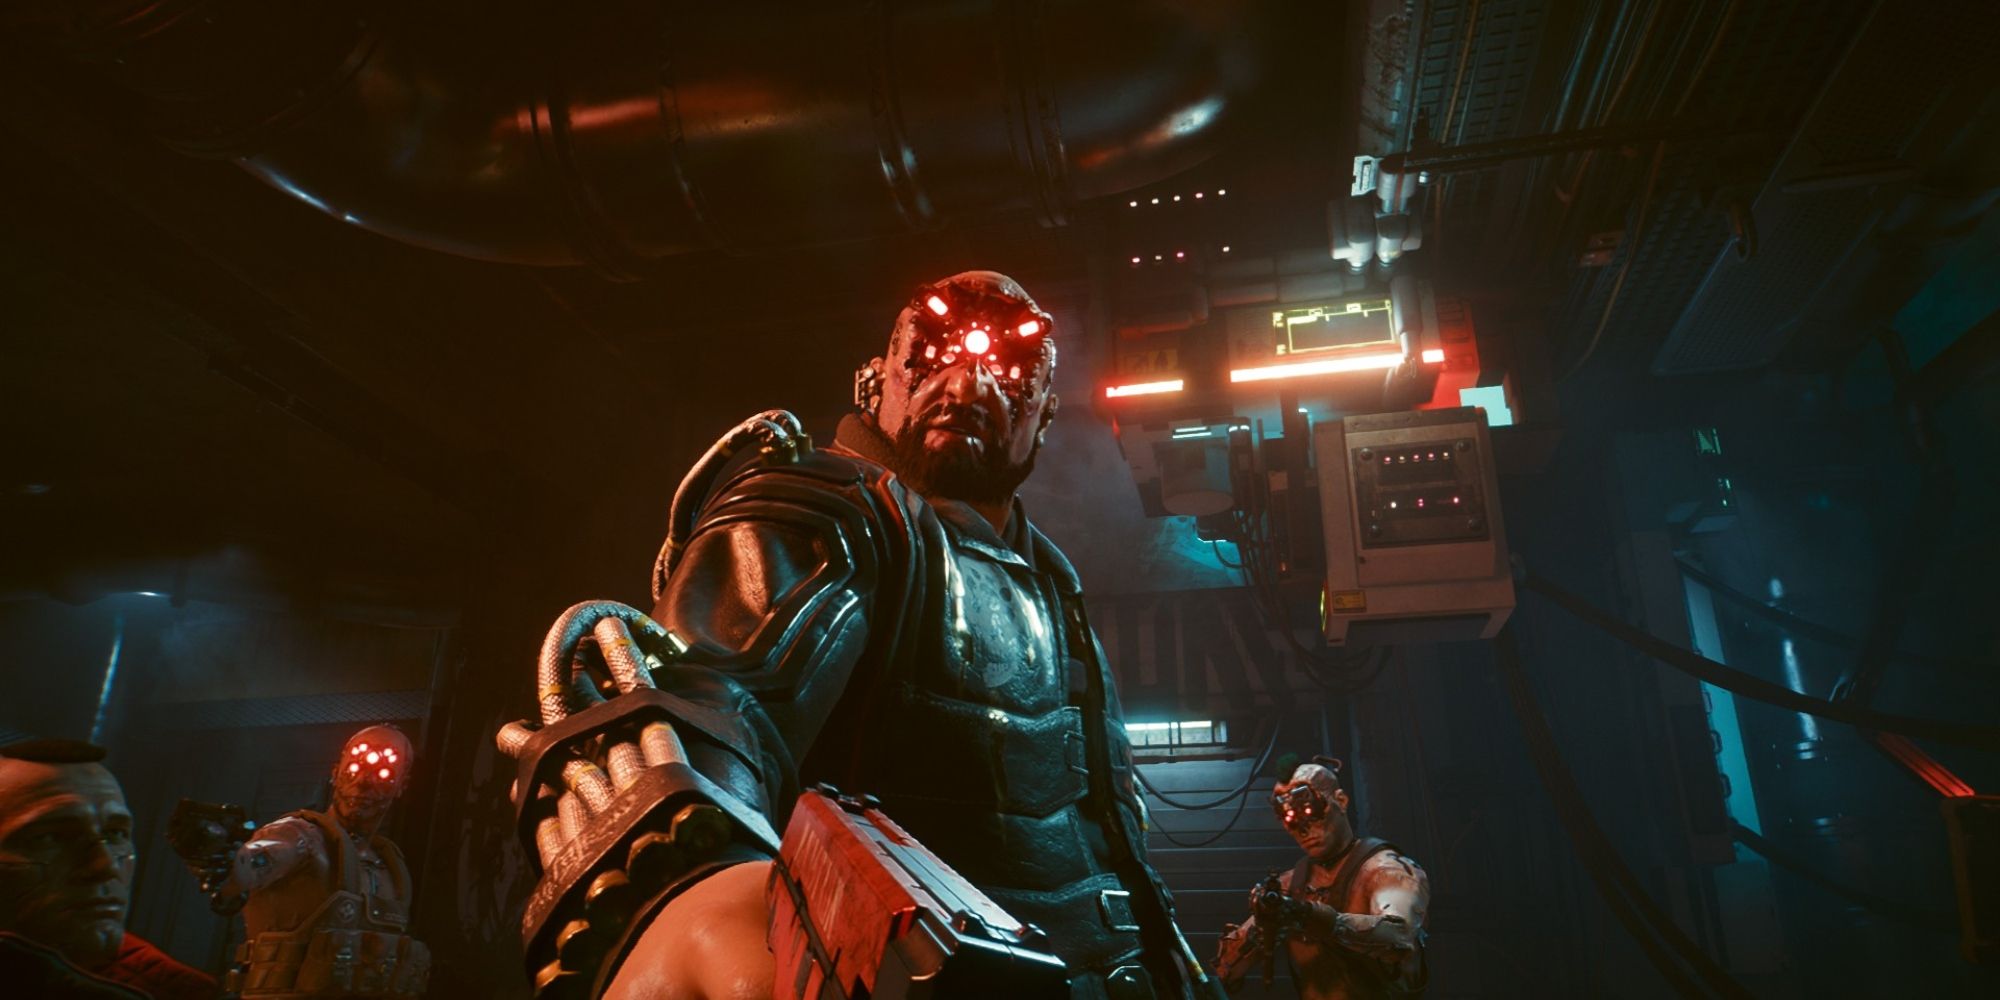 Cyberpunk 2077 Royce pointing gun at player